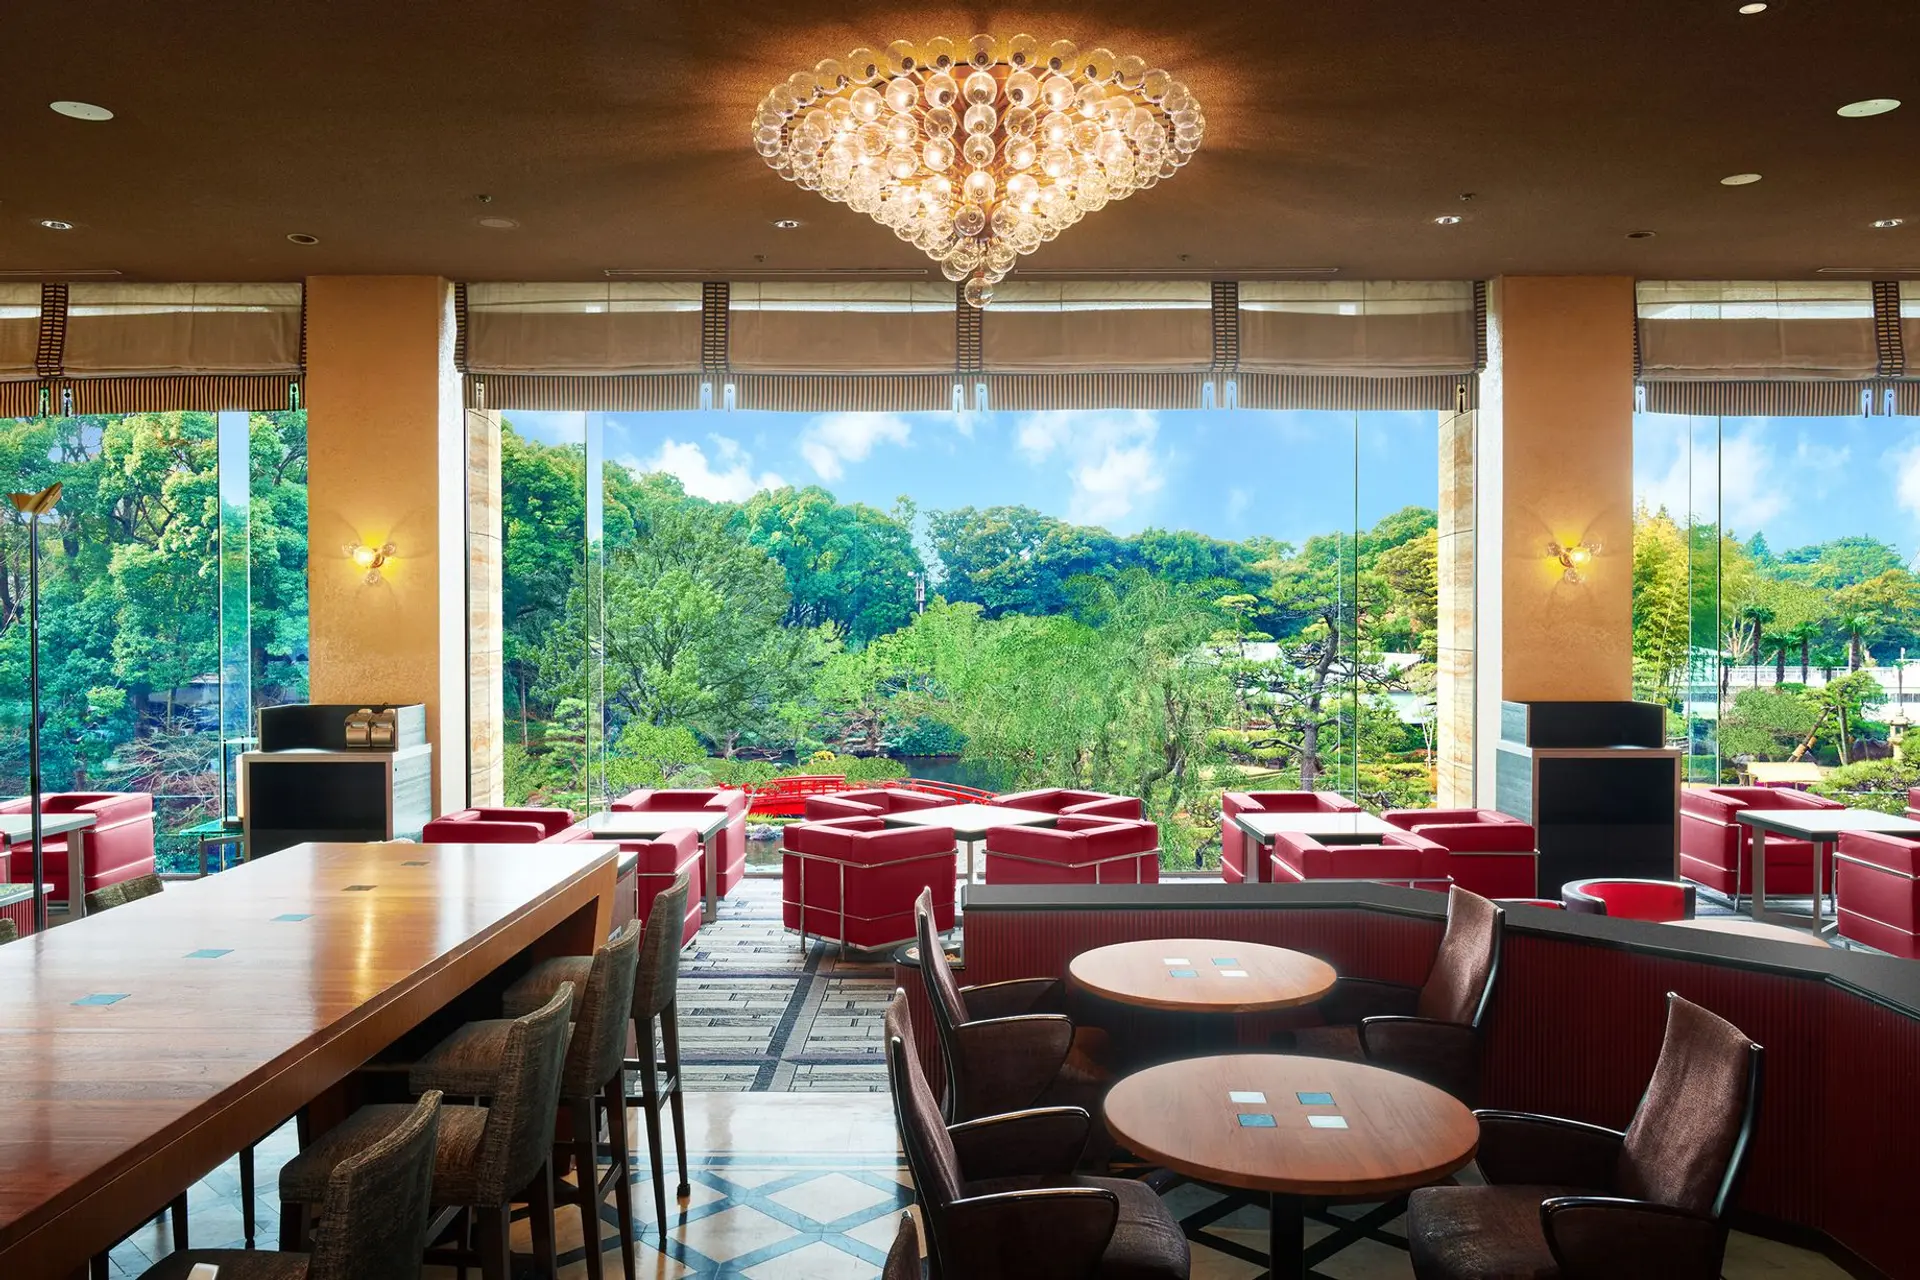 Hotel review Style' - Hotel New Otani Executive House Zen - 2